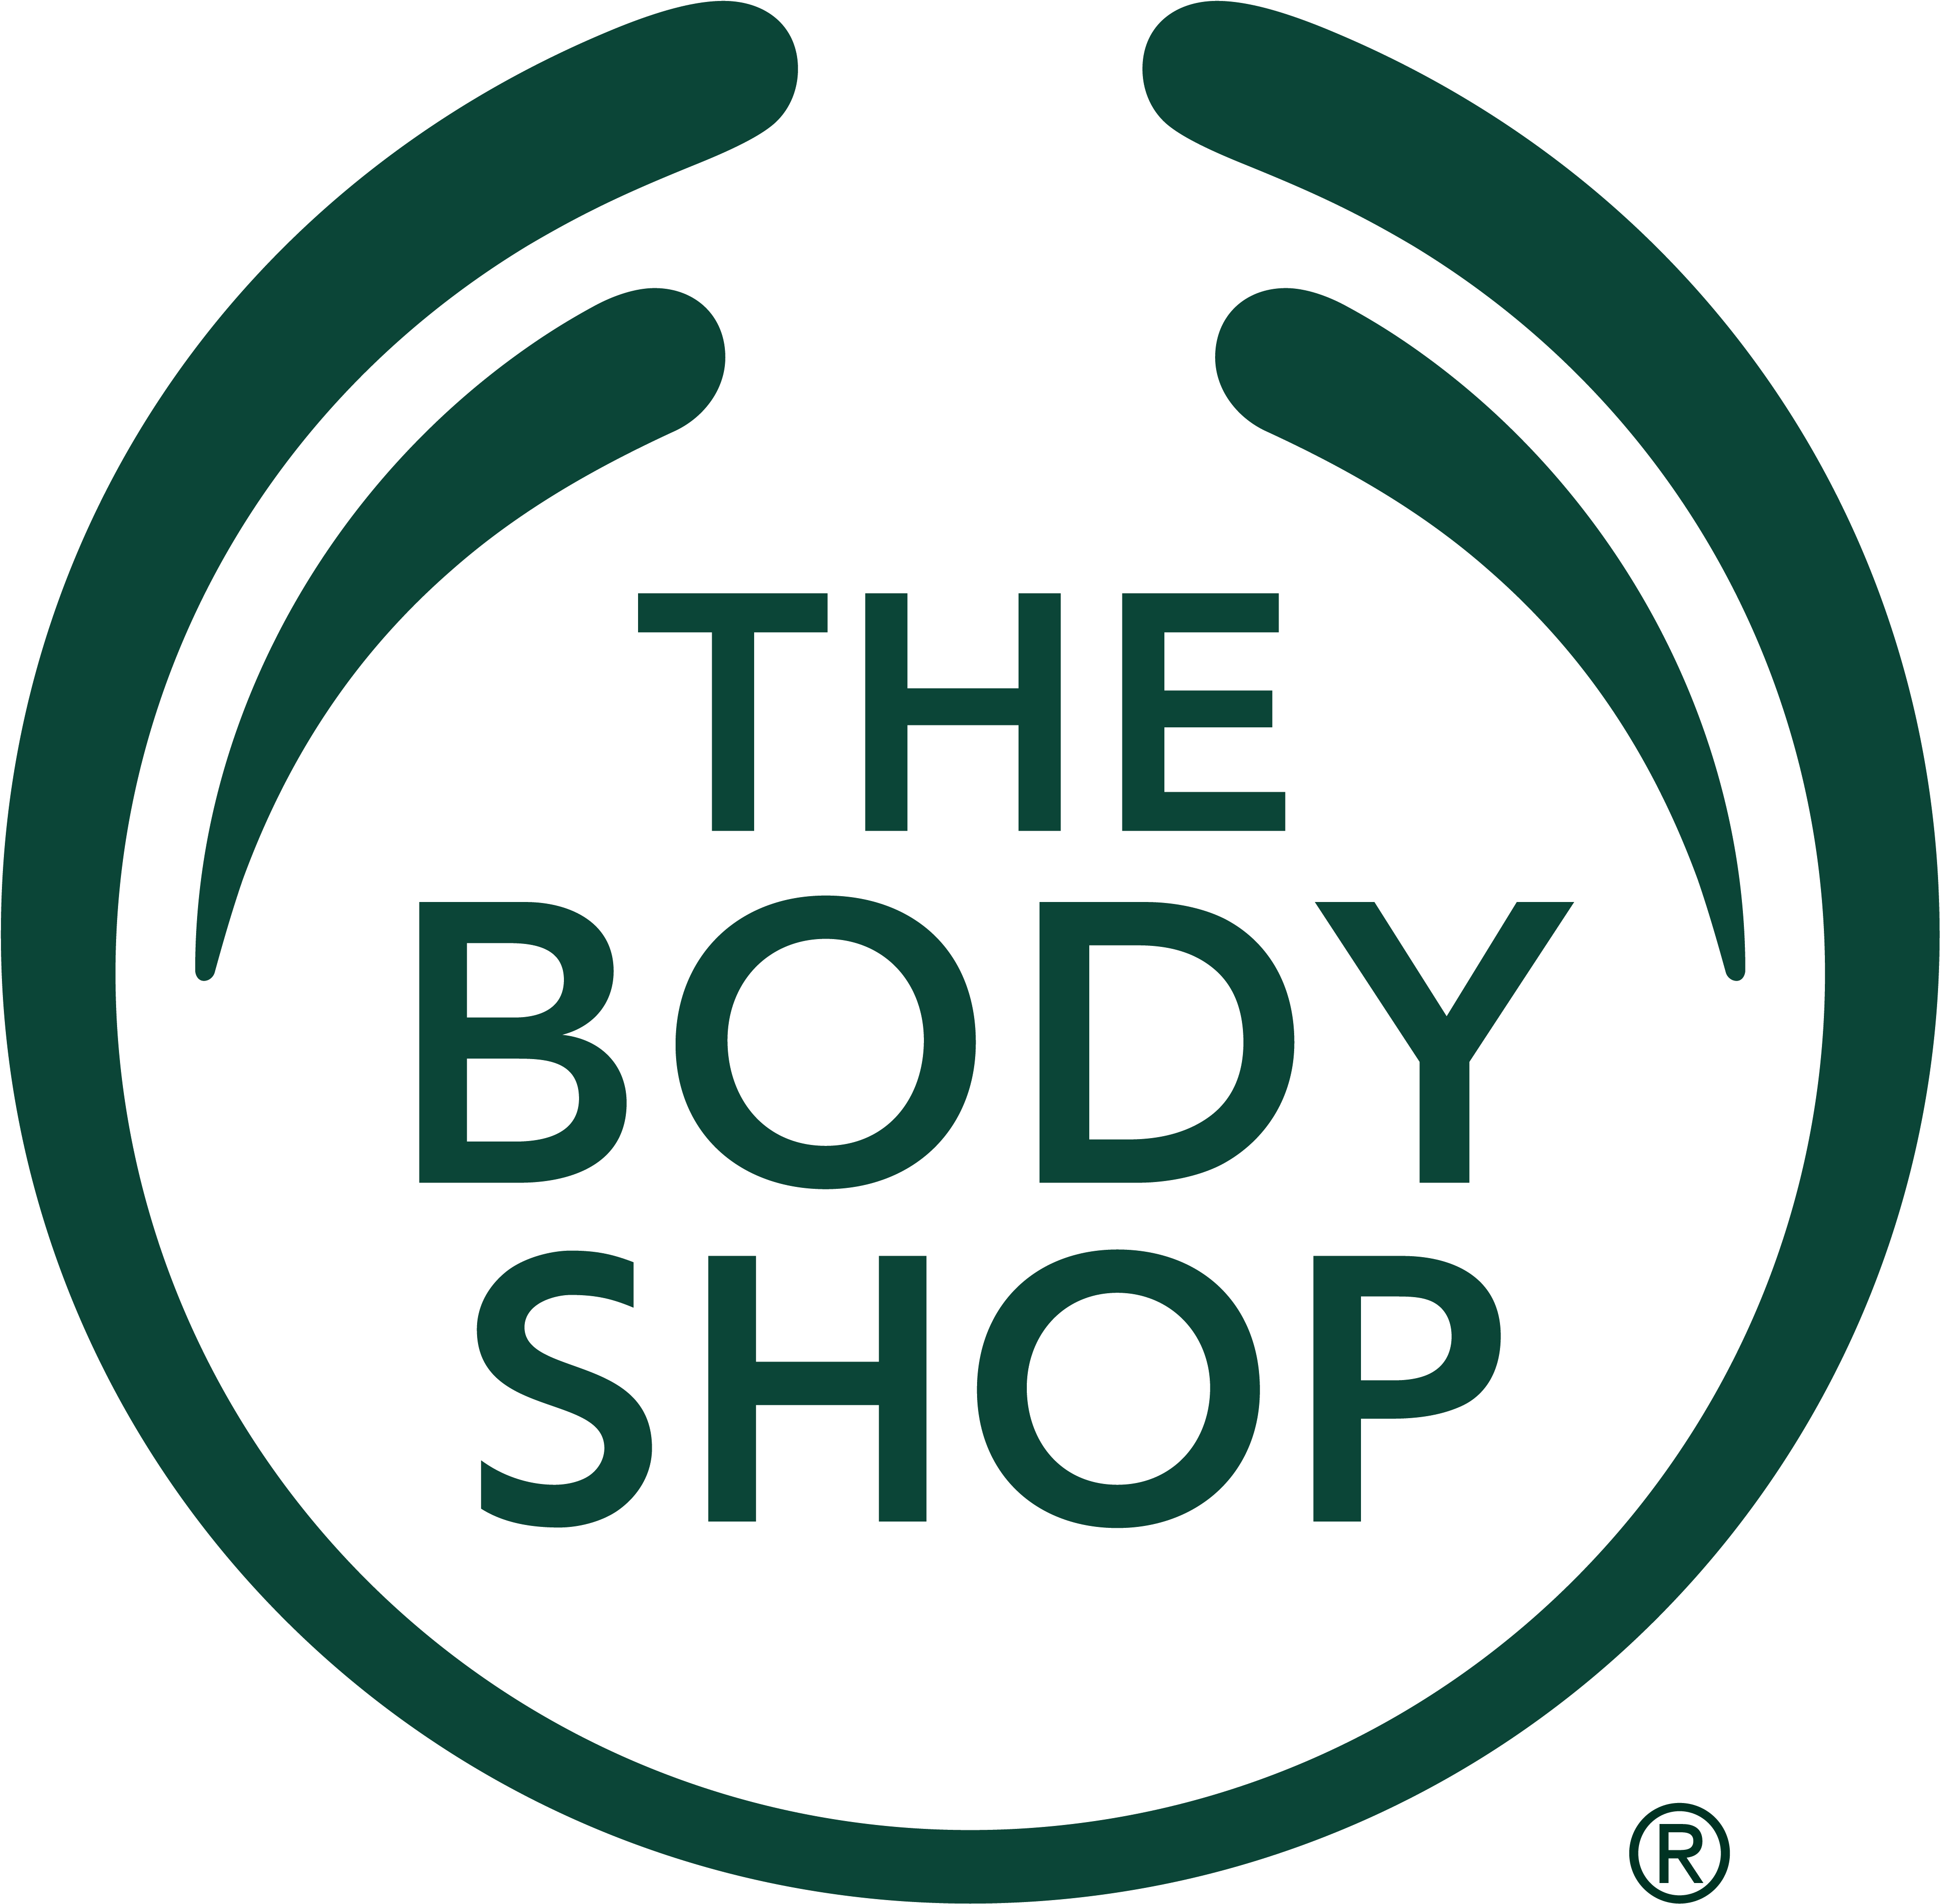 The Body Shop Logos Download Rh Logos Download Com - Body Shop Japanese Musk Perfume Oil (4321x4369)